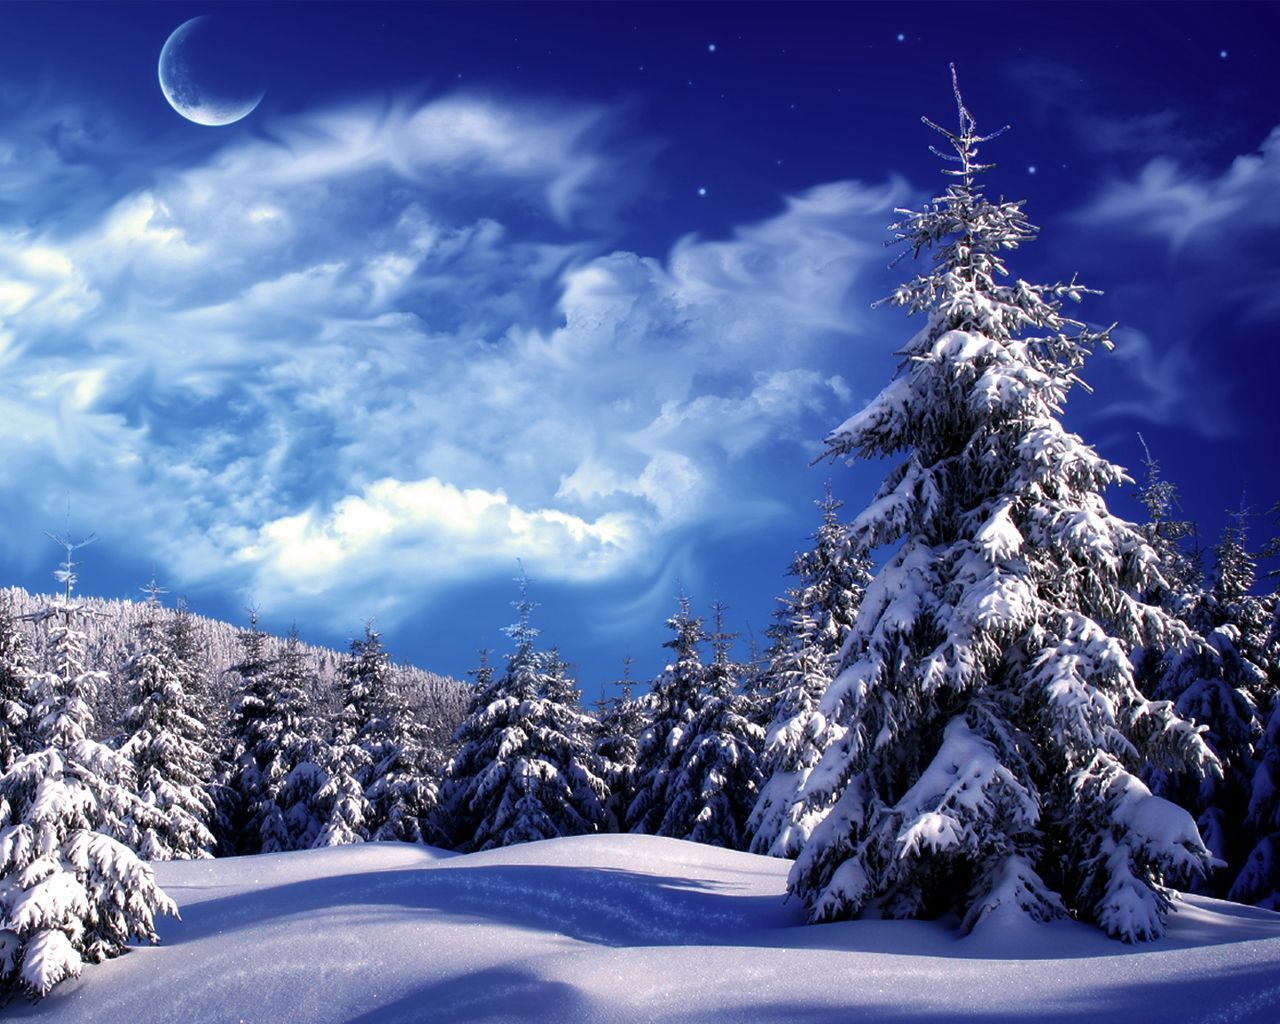 winter wonderland image free. Free Online Wallpaper. natures beauty. Winter snow wallpaper, Winter scenery, Winter wallpaper